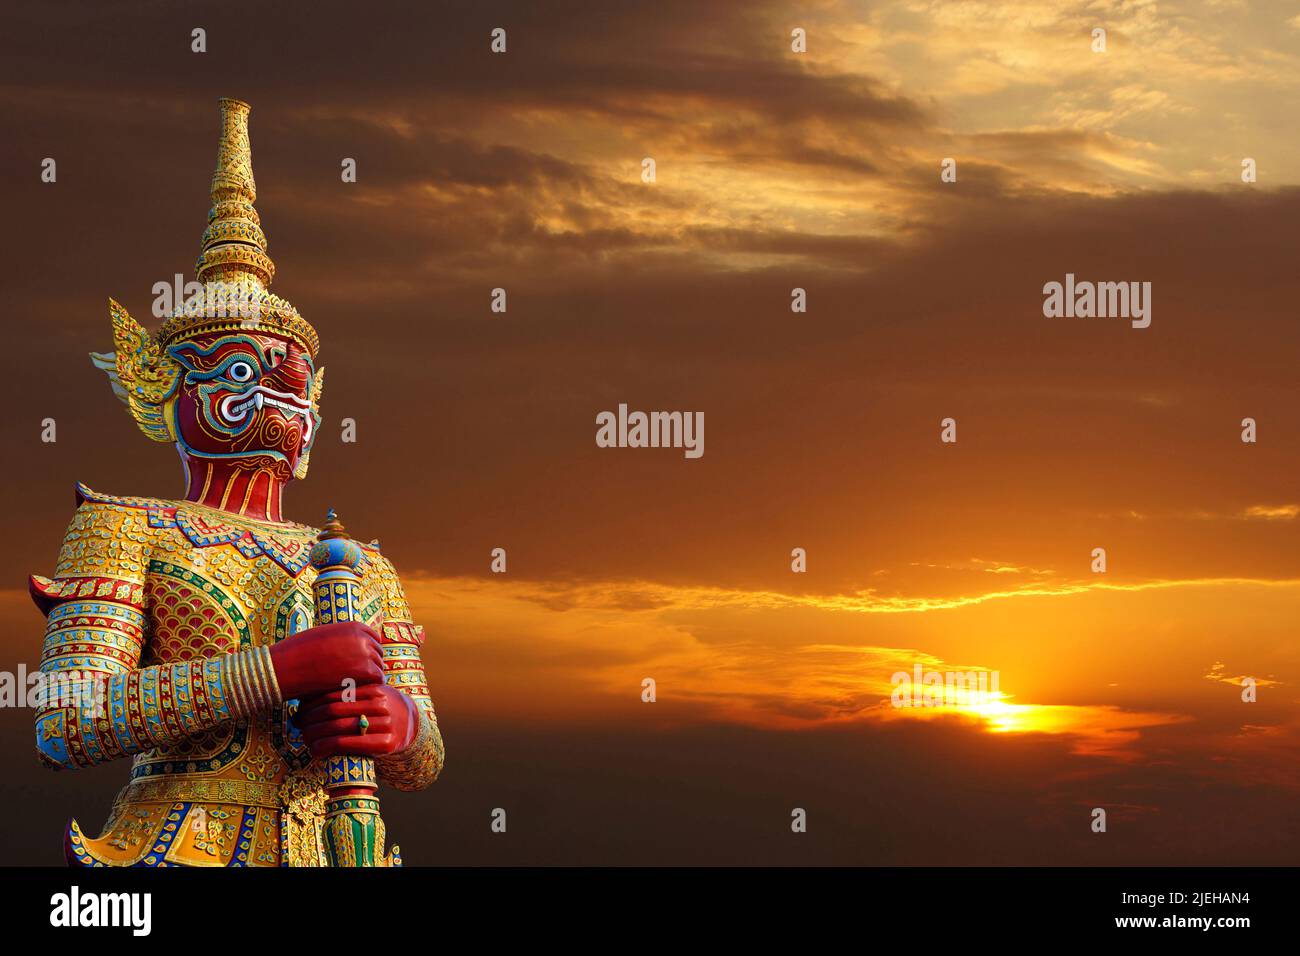 Yak, Yaksa, Teppanom, Tempelwaechter en Tailandia, Foto de stock